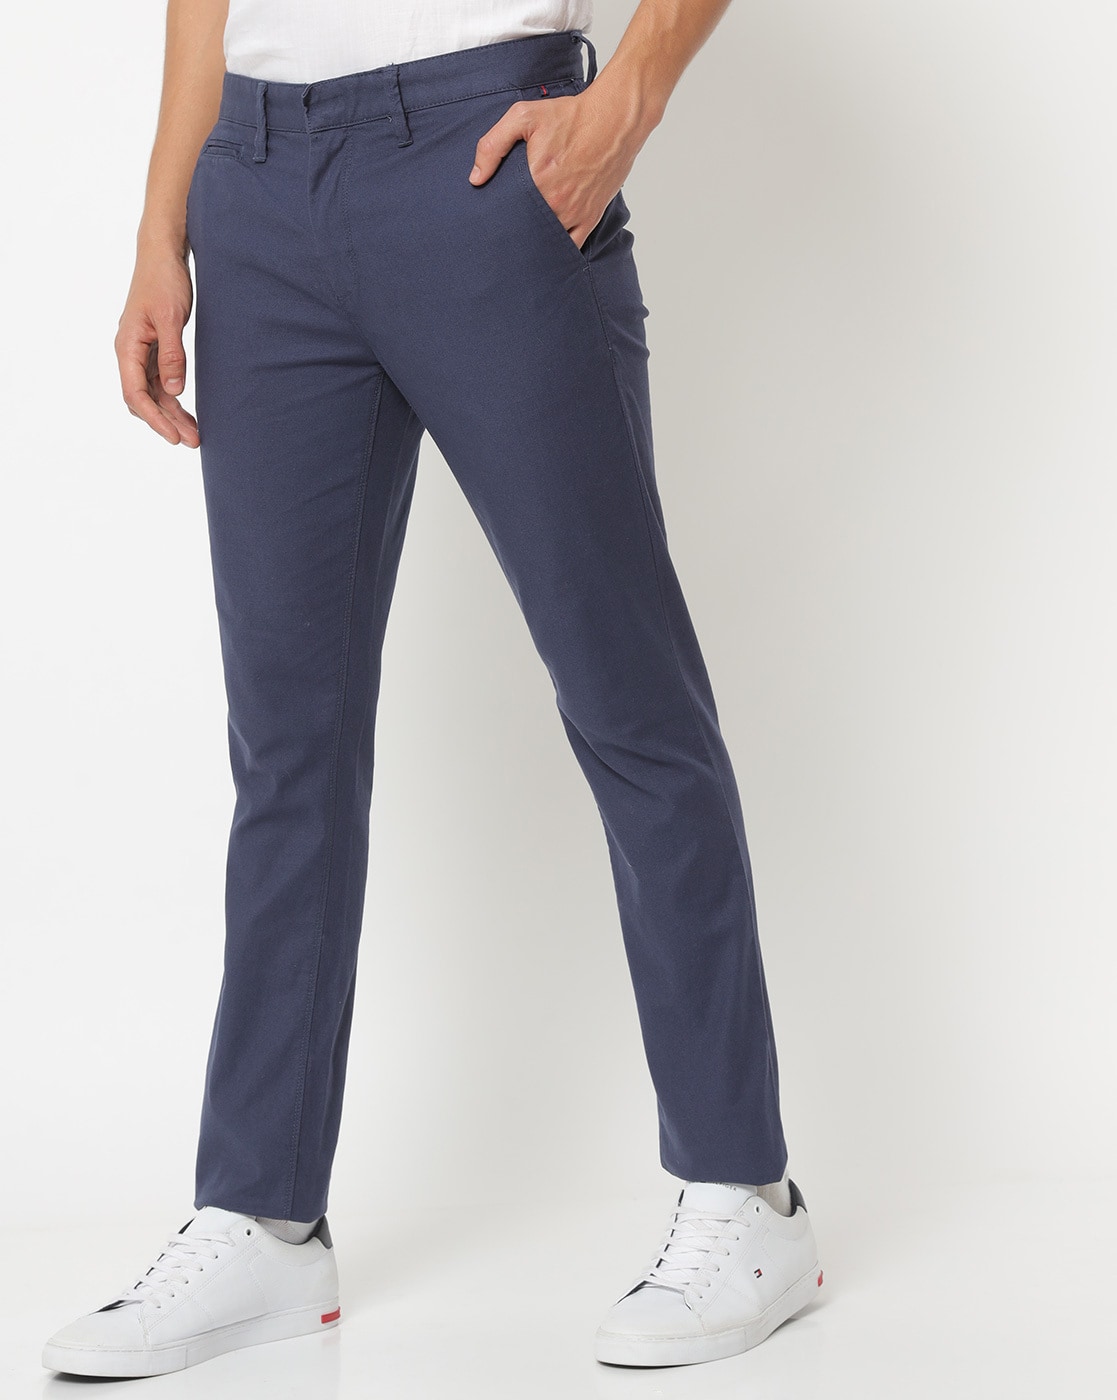 Buy Olive Brown Skinny Fit Cargo Trousers online  Looksgudin